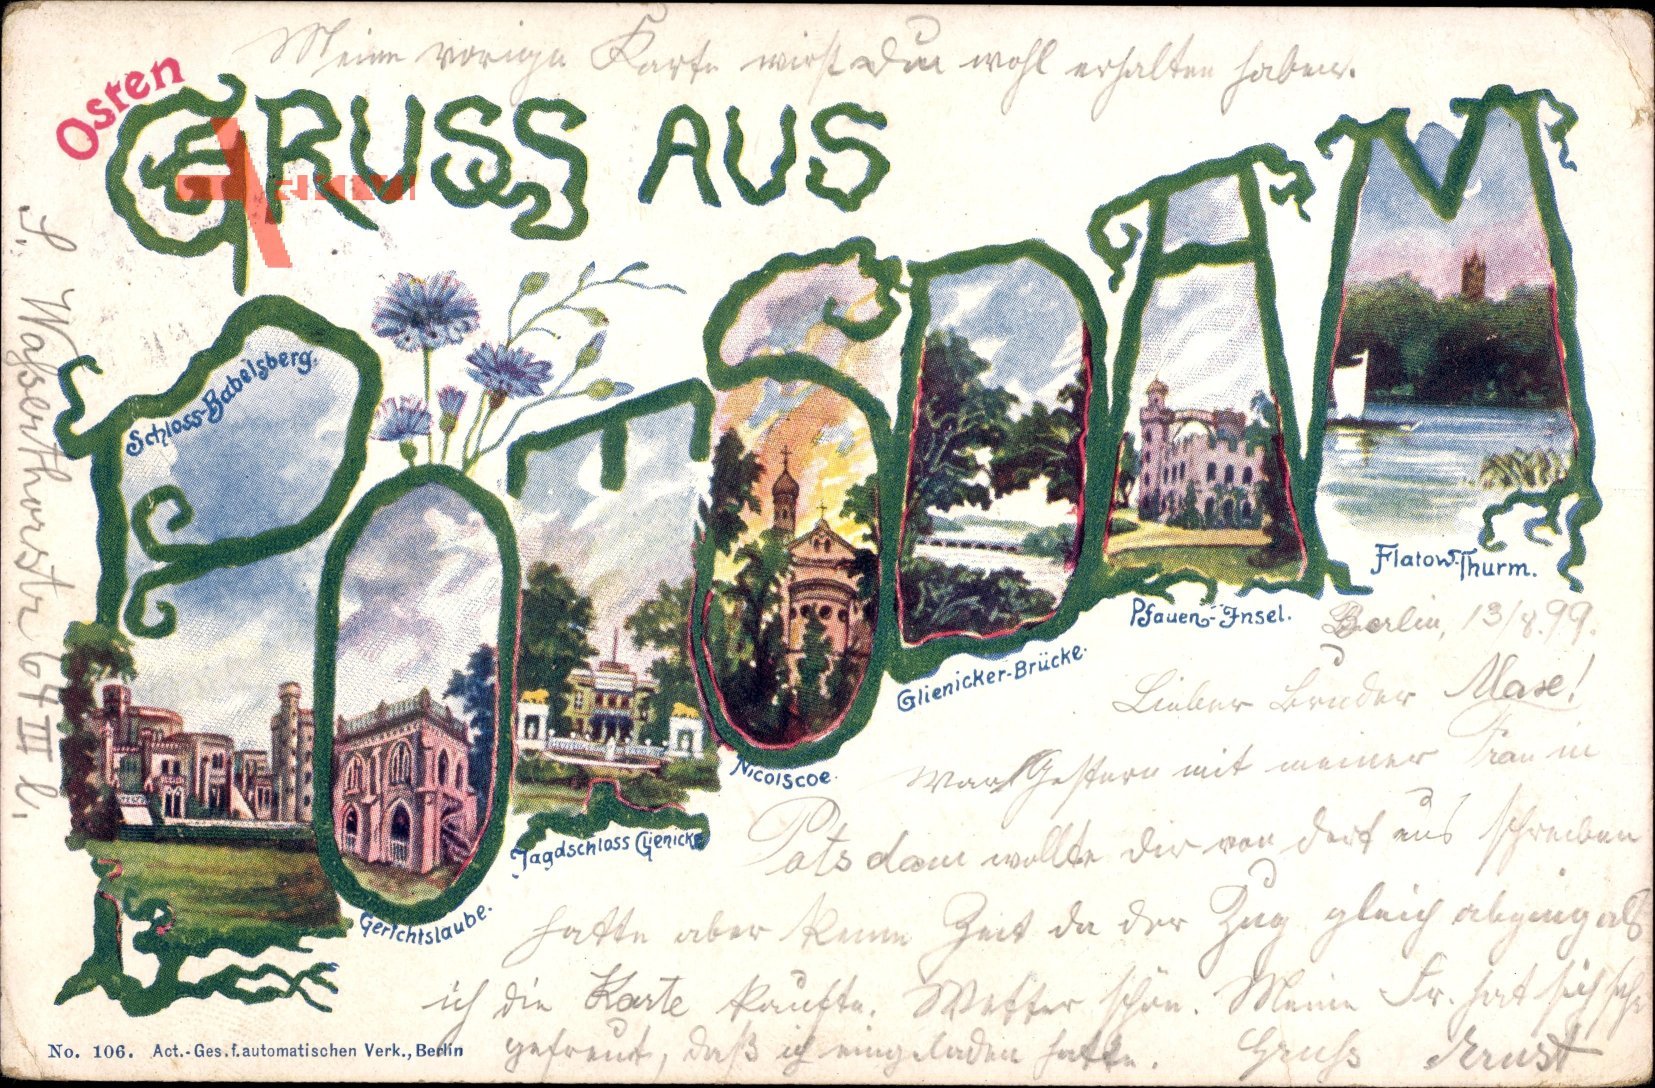 Buchstaben Potsdam Brandenburg, Schloss Babelsberg, Pfauen Insel, Flatow Turm